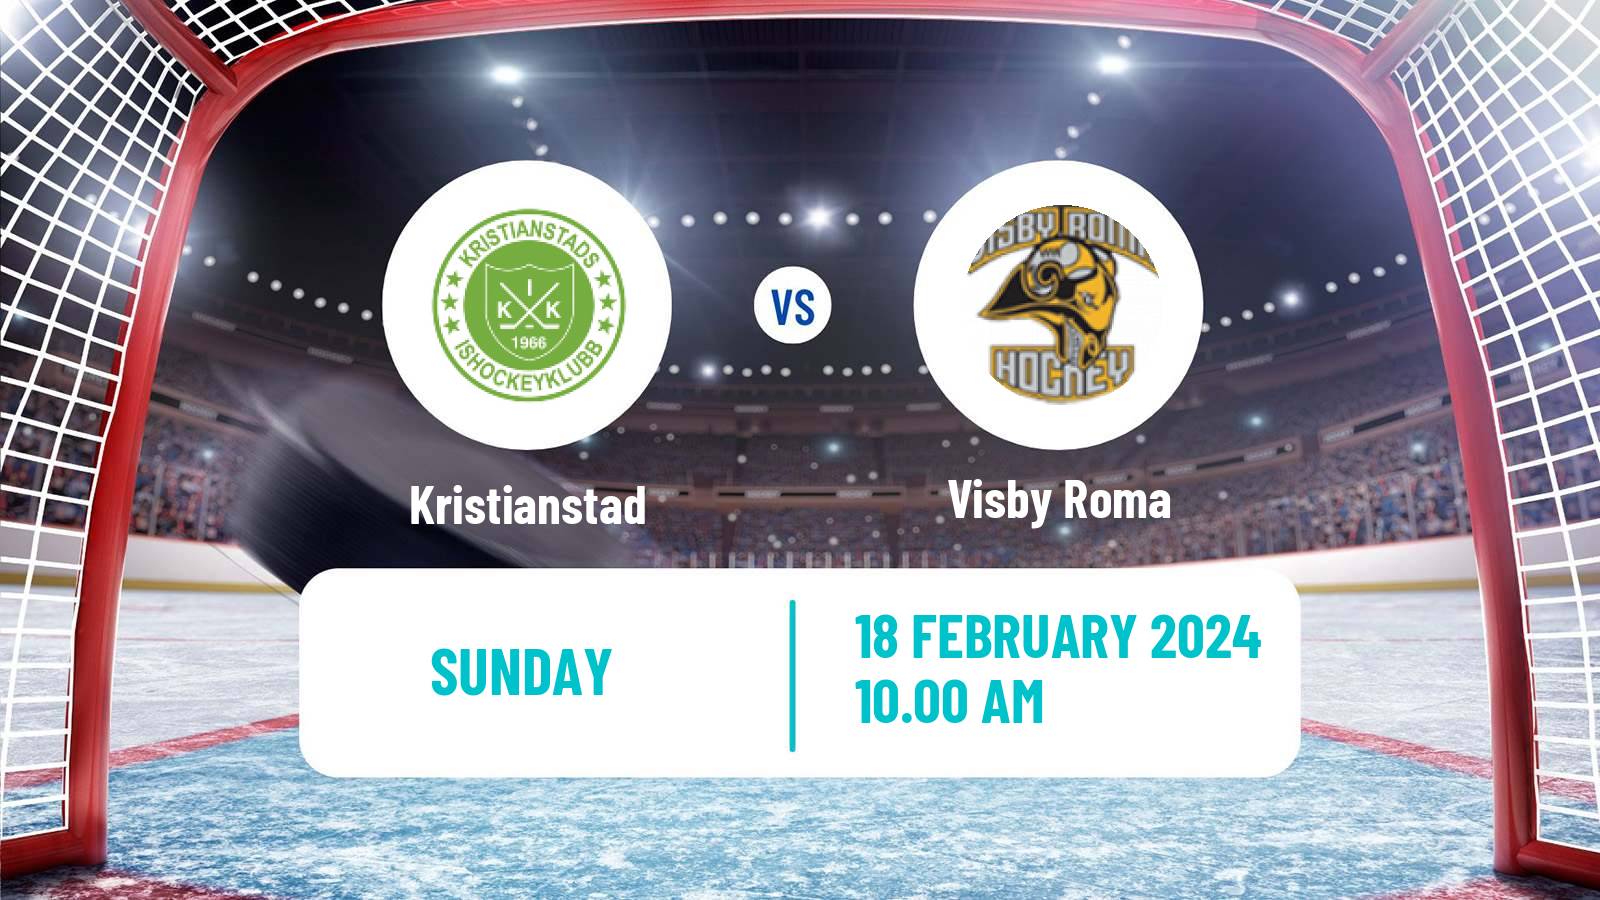 Hockey Swedish HockeyEttan Sodra Kristianstad - Visby Roma